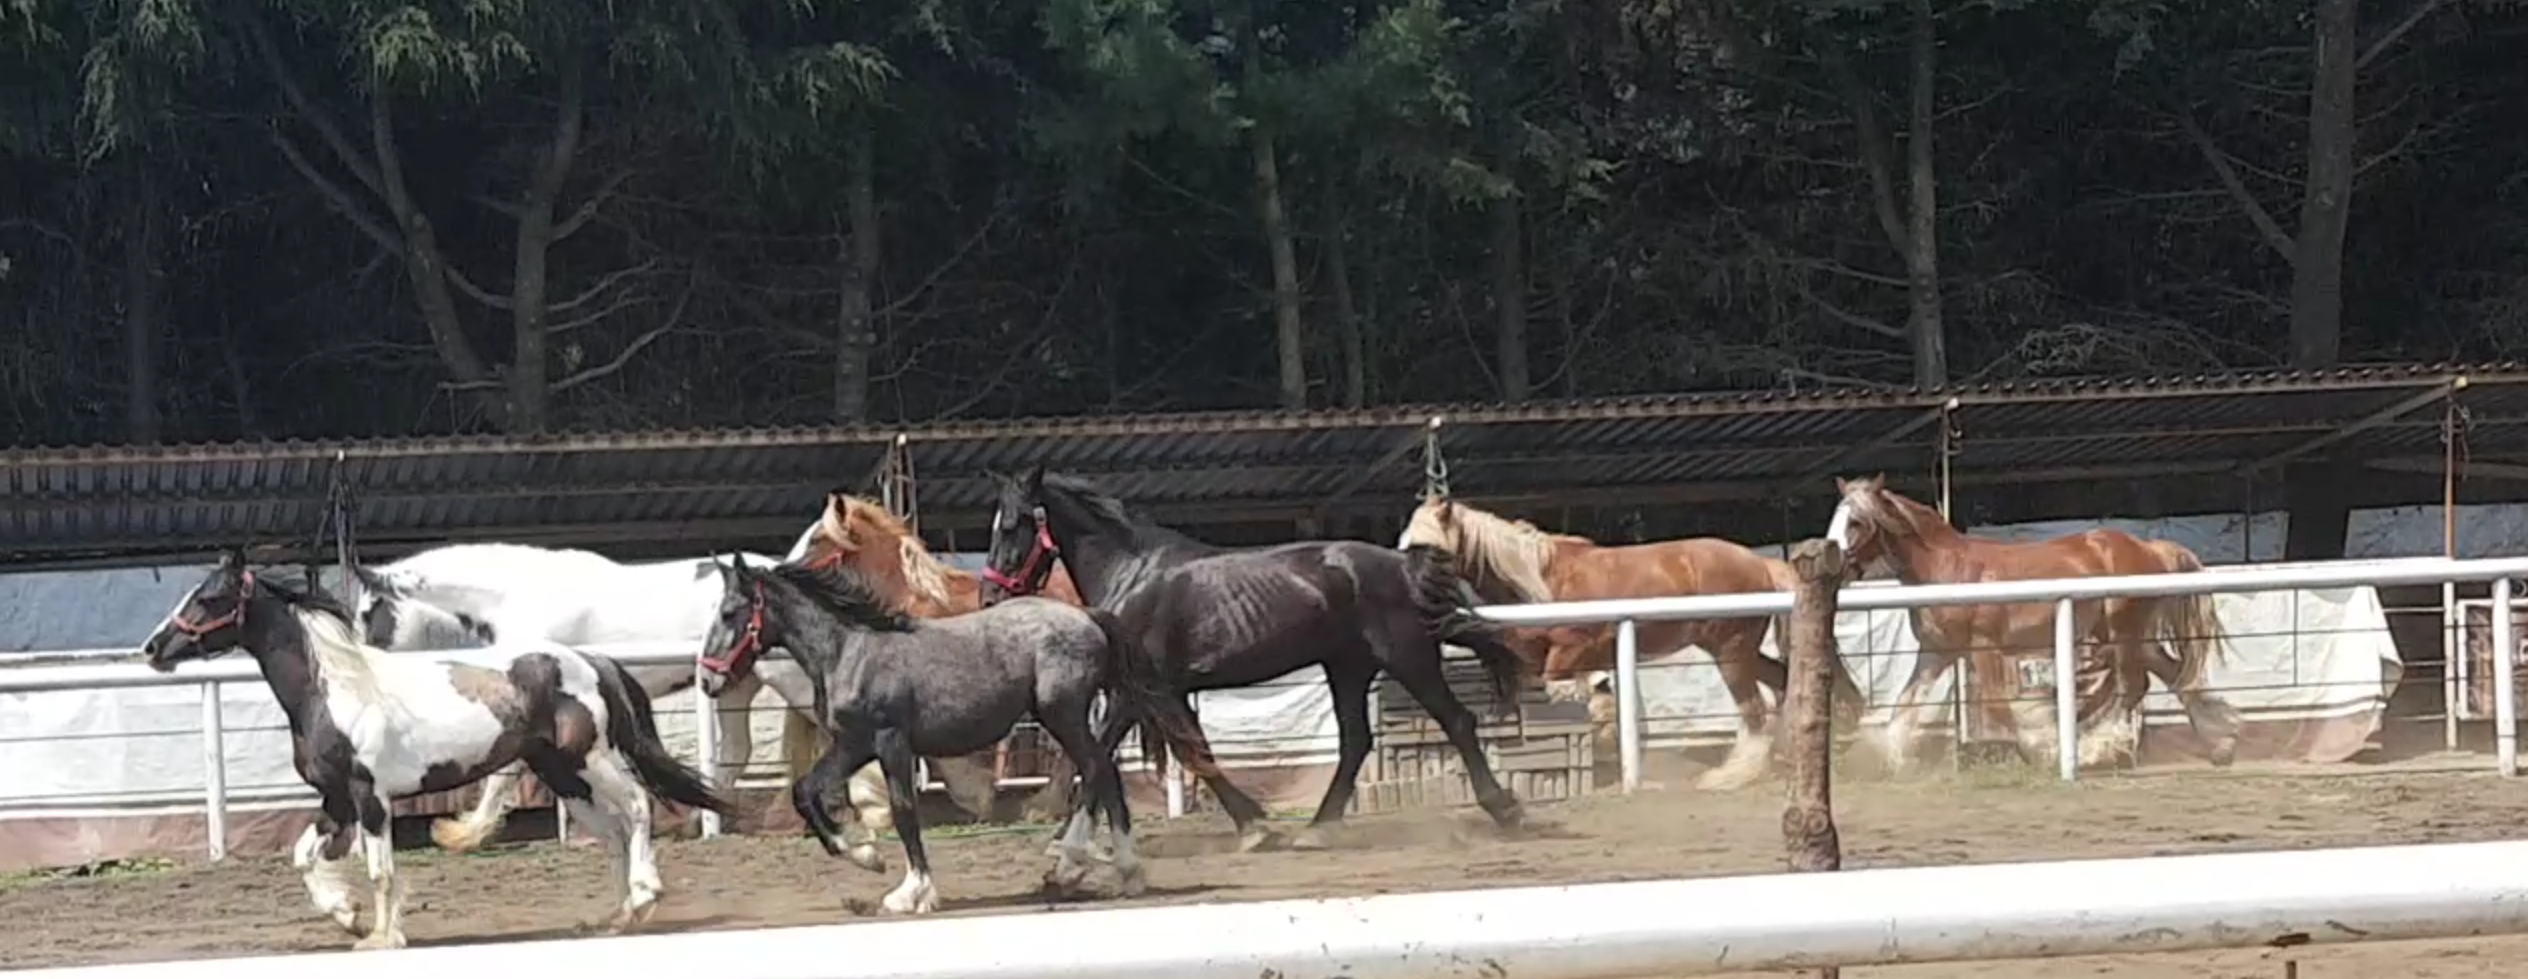 Sesiones individuales de Coaching con caballos Horsetellations